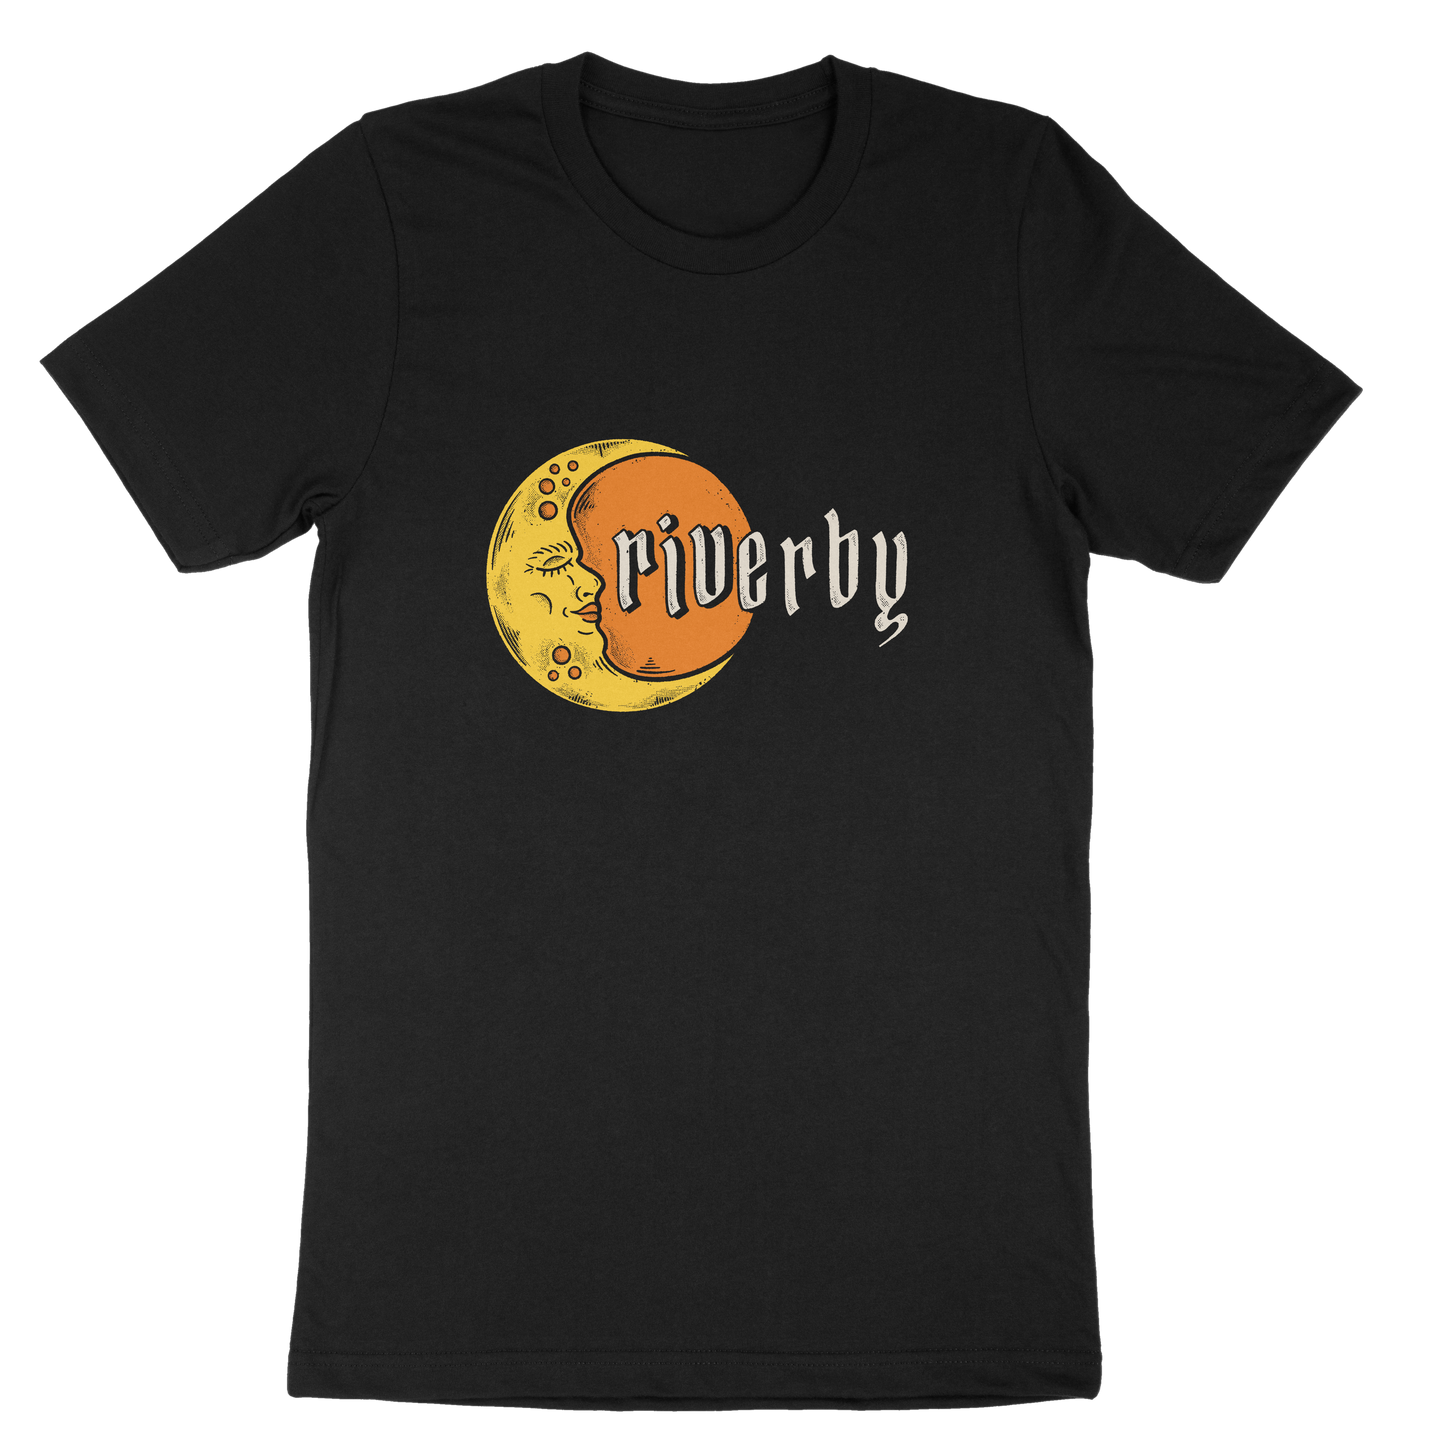 Riverby - "Moon" T-Shirt